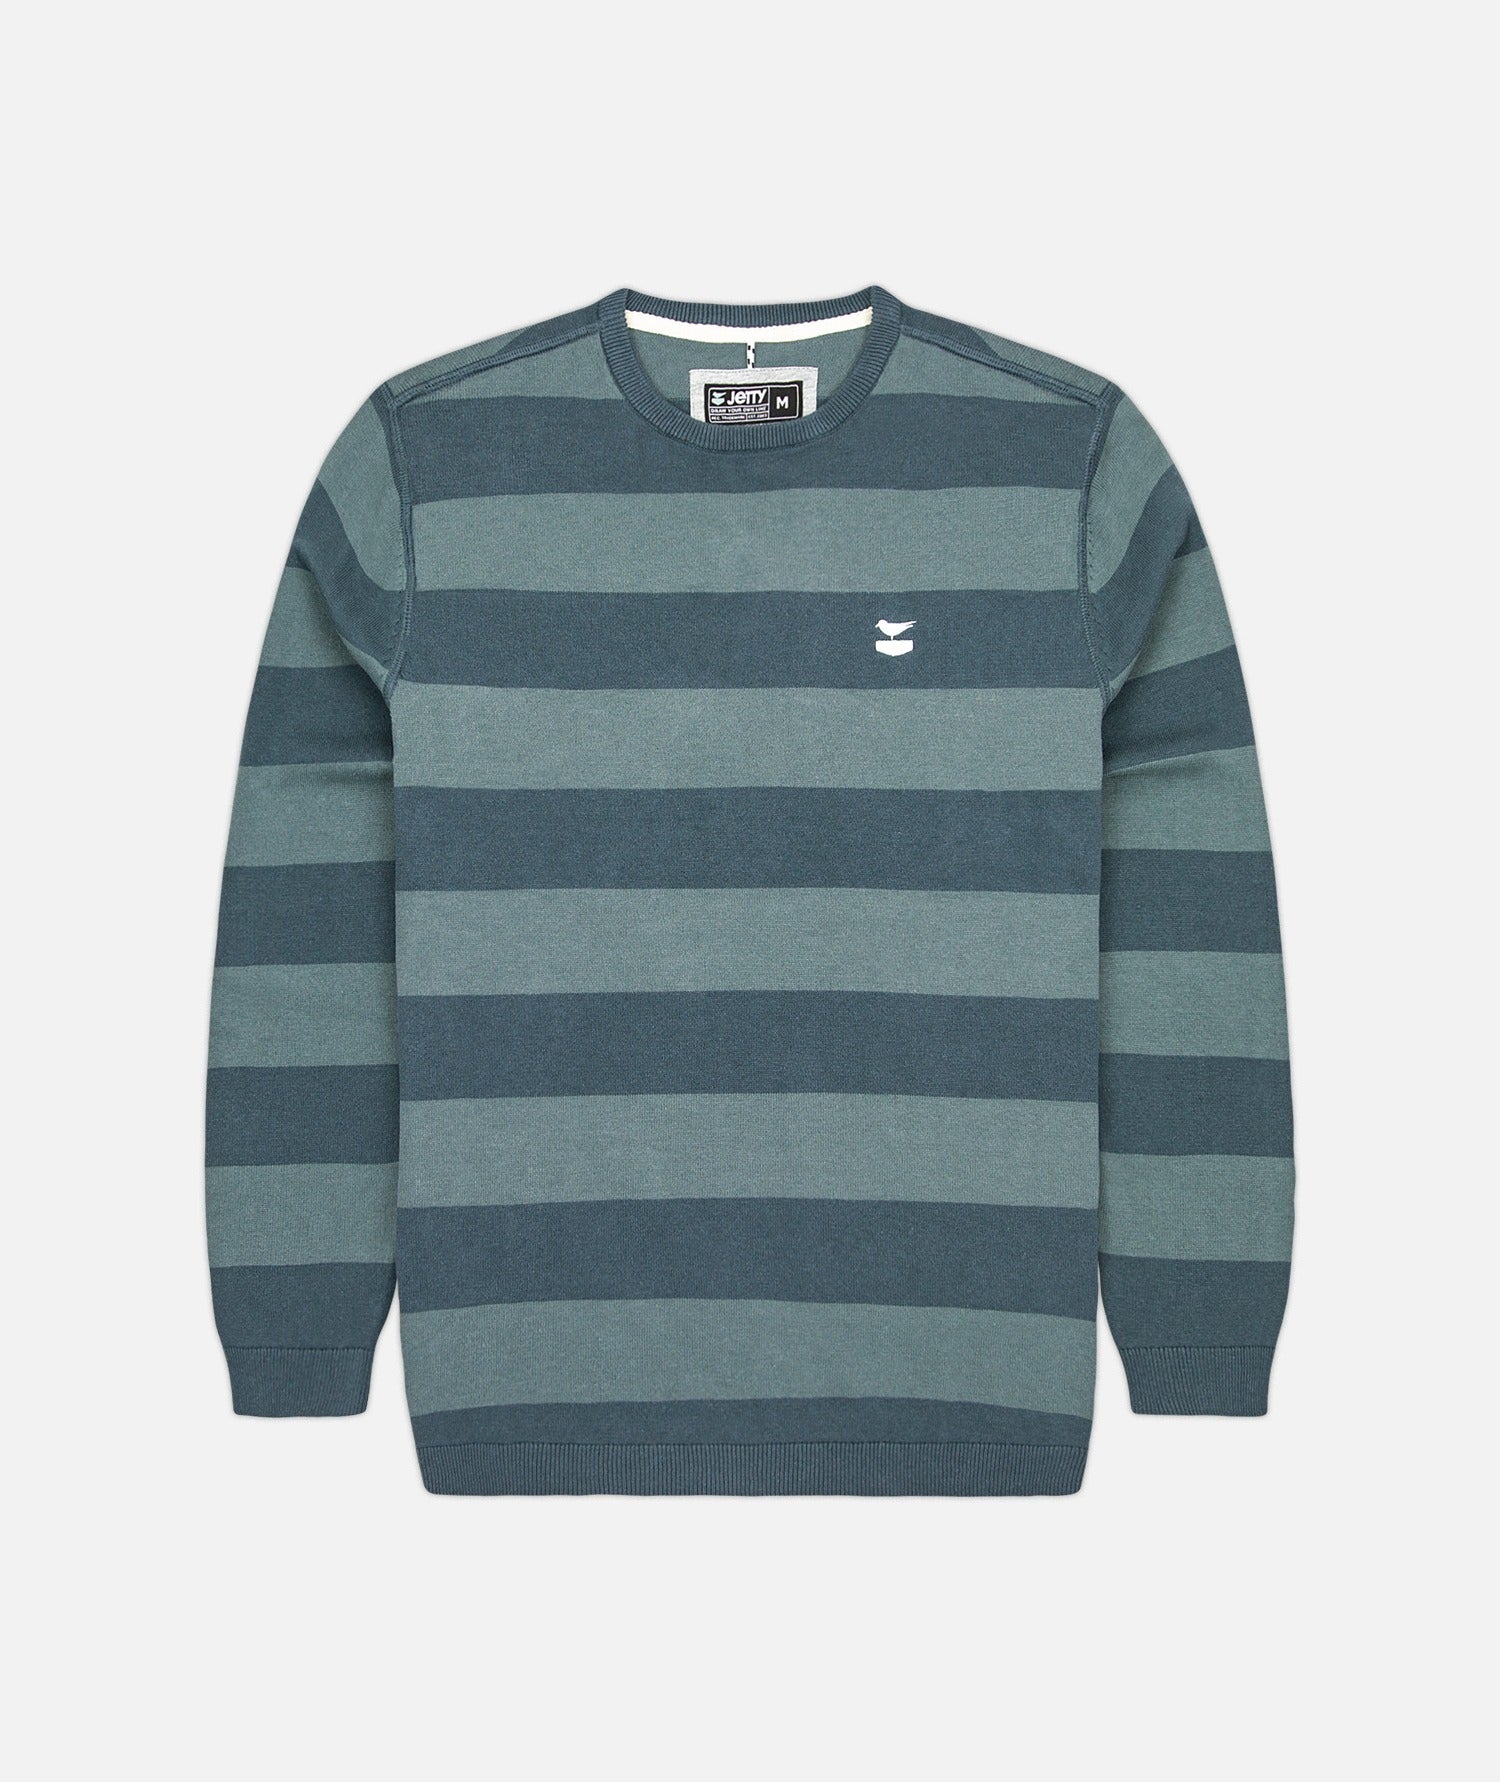 Group: Turner Sweater